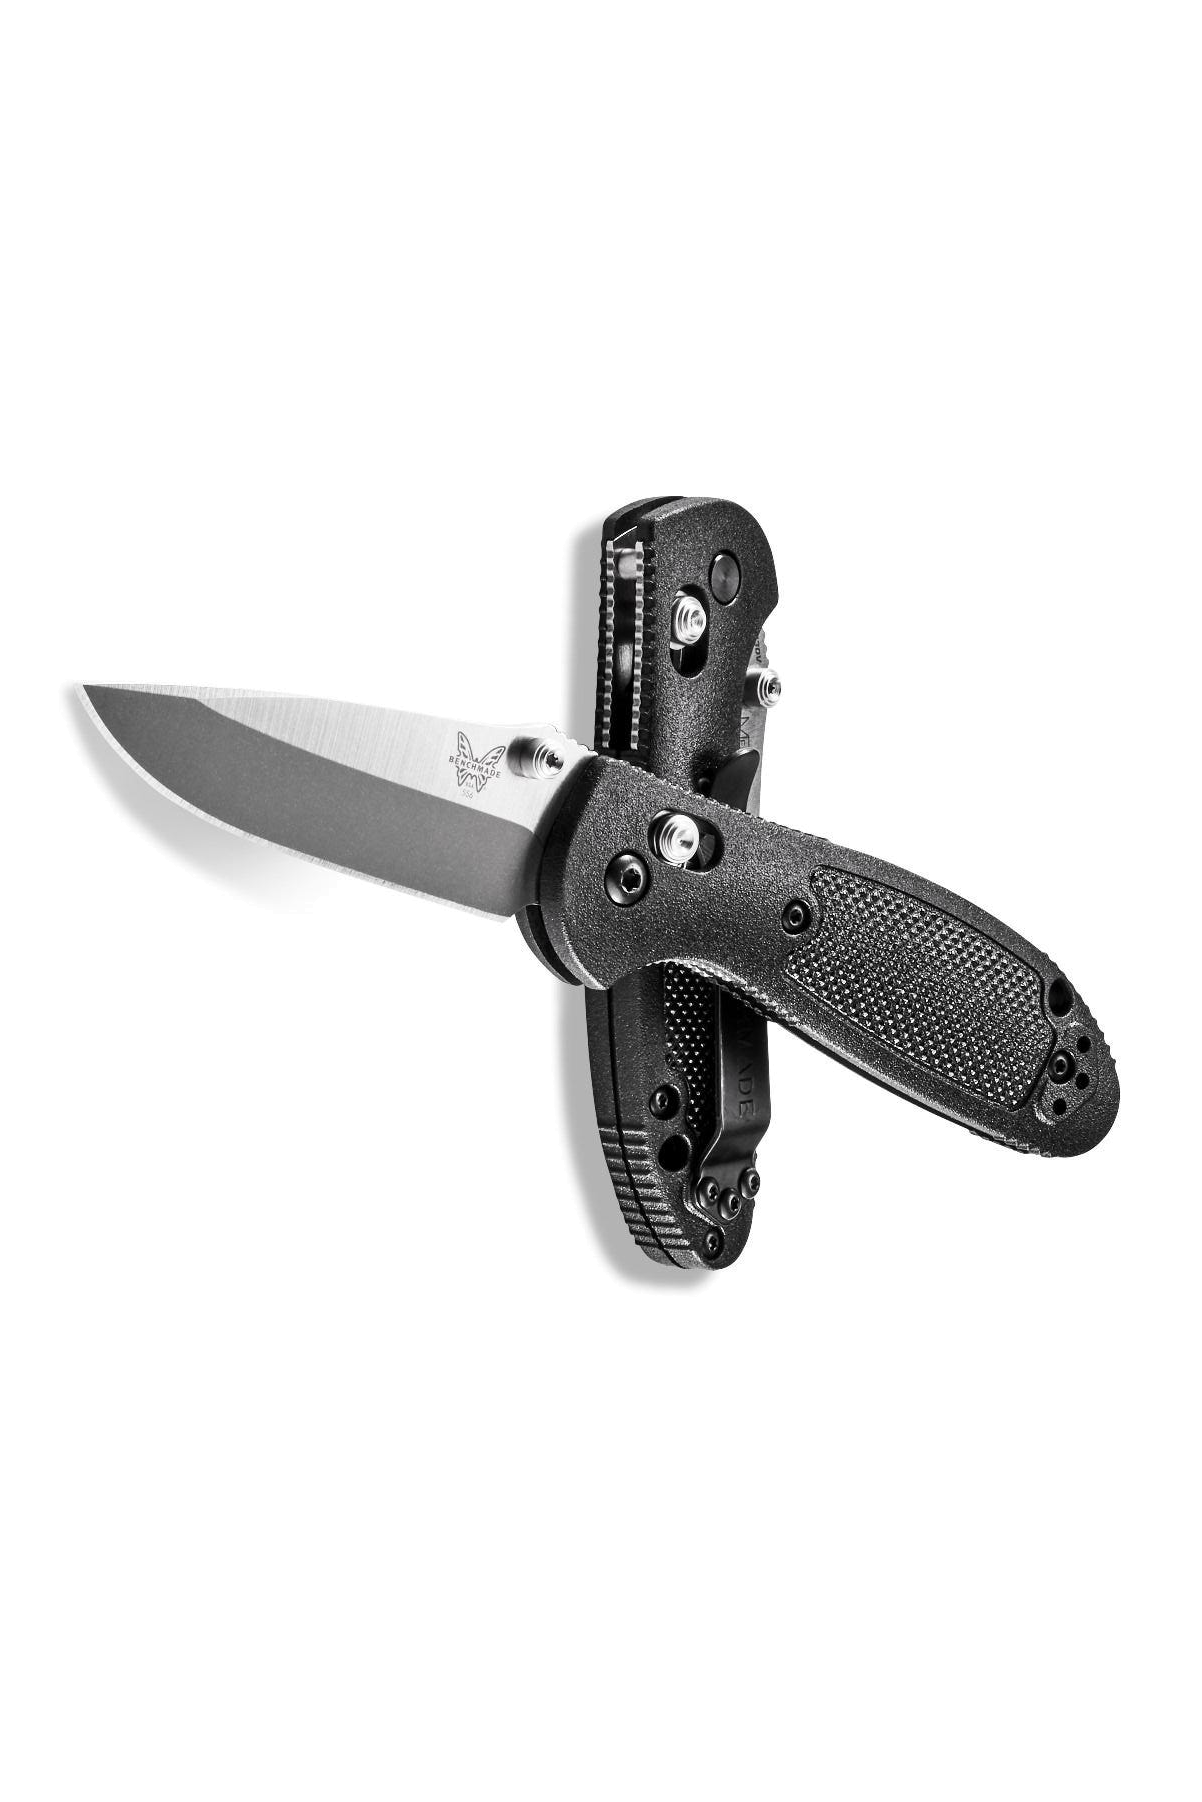 Benchmade Griptilian 556 Multitool Knife product image